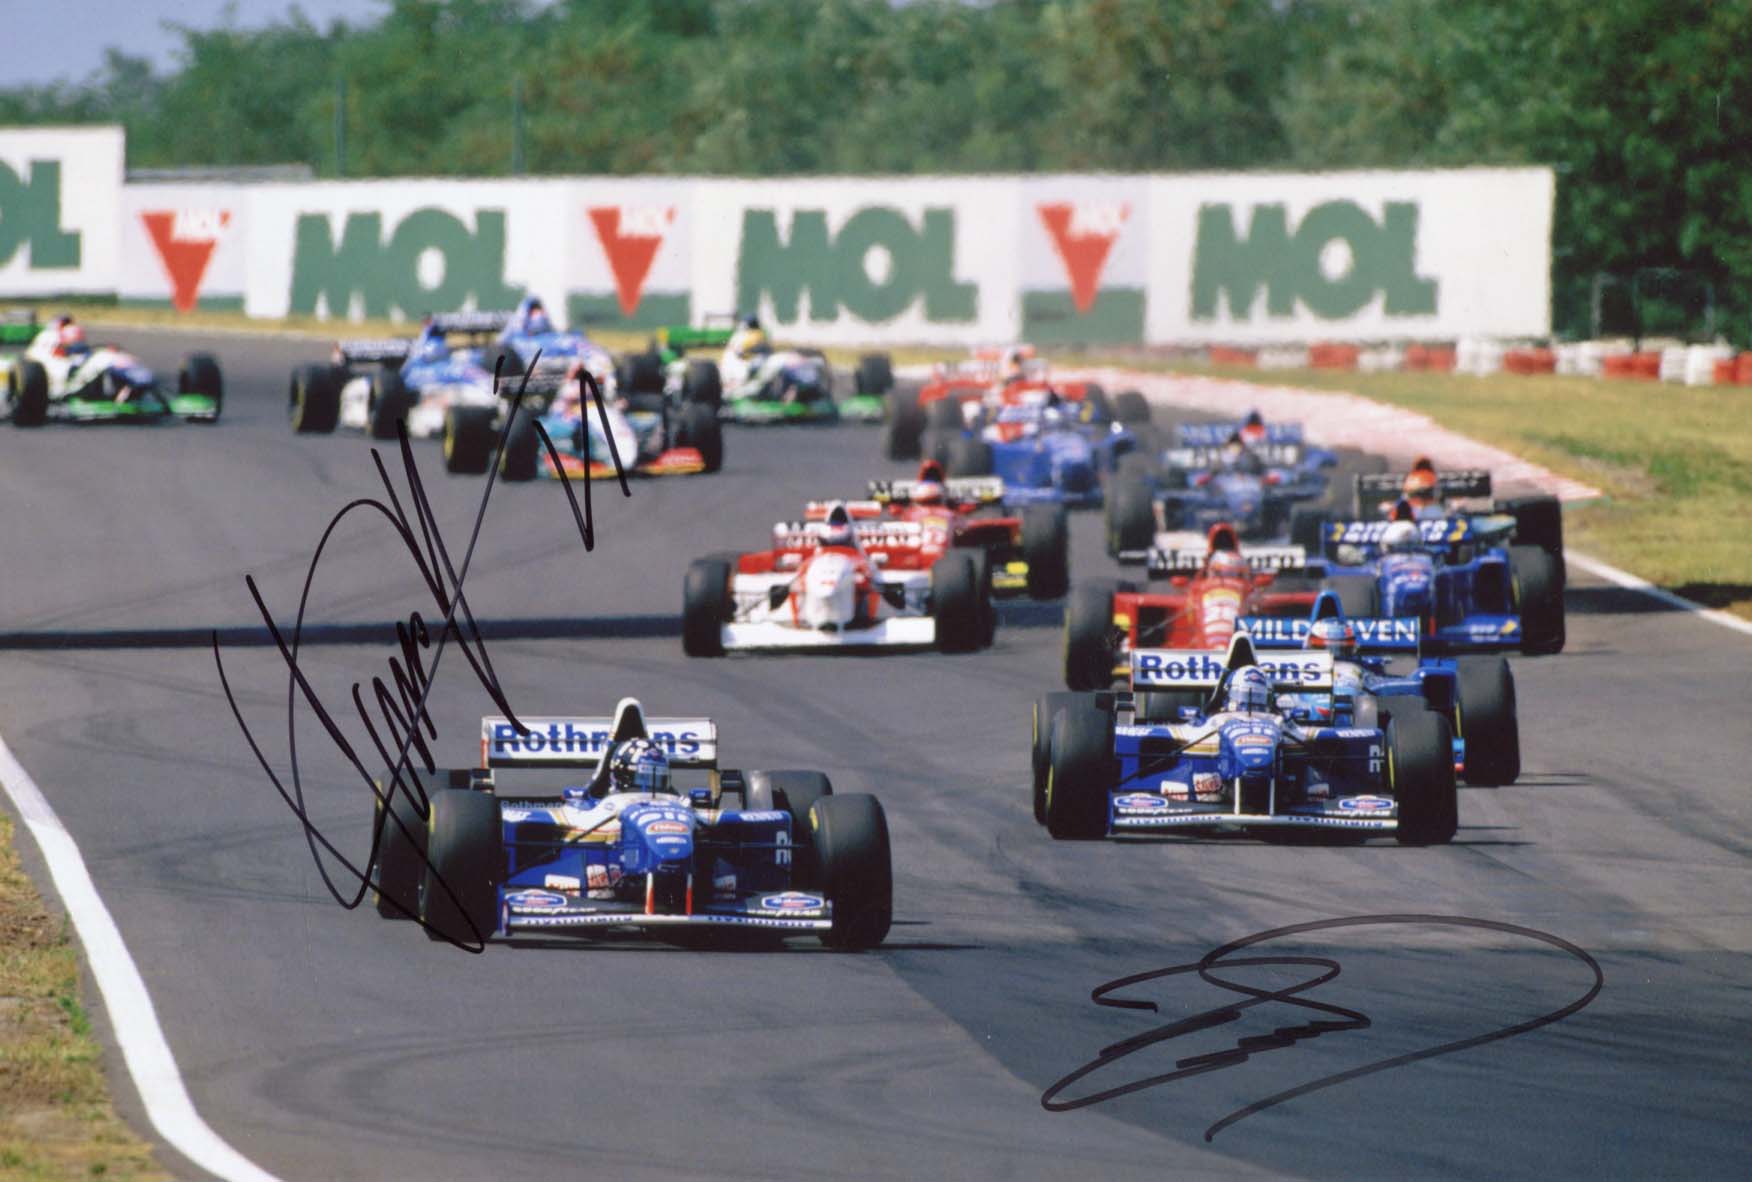 David Coulthard & Damon Hill Autographs